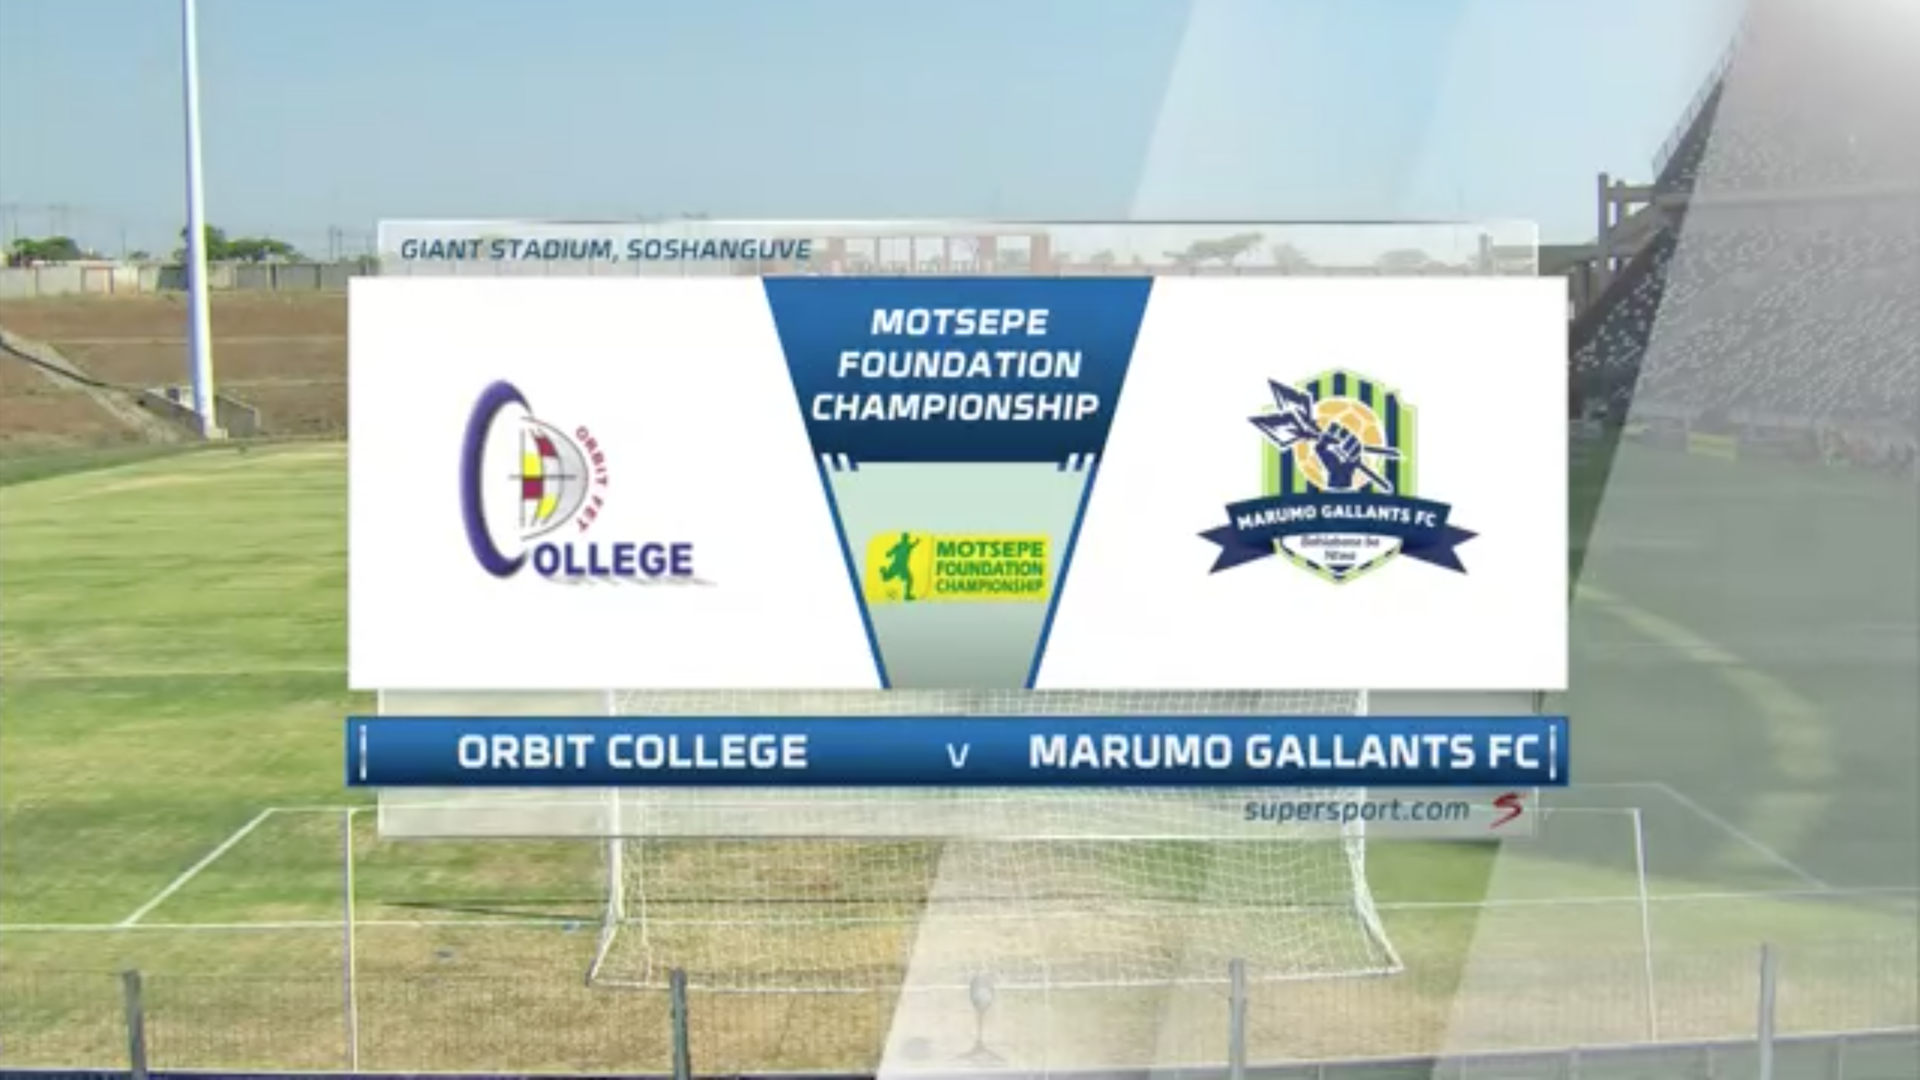 Orbit College v Marumo Gallants | Match Highlights | Motsepe Foundation Championship